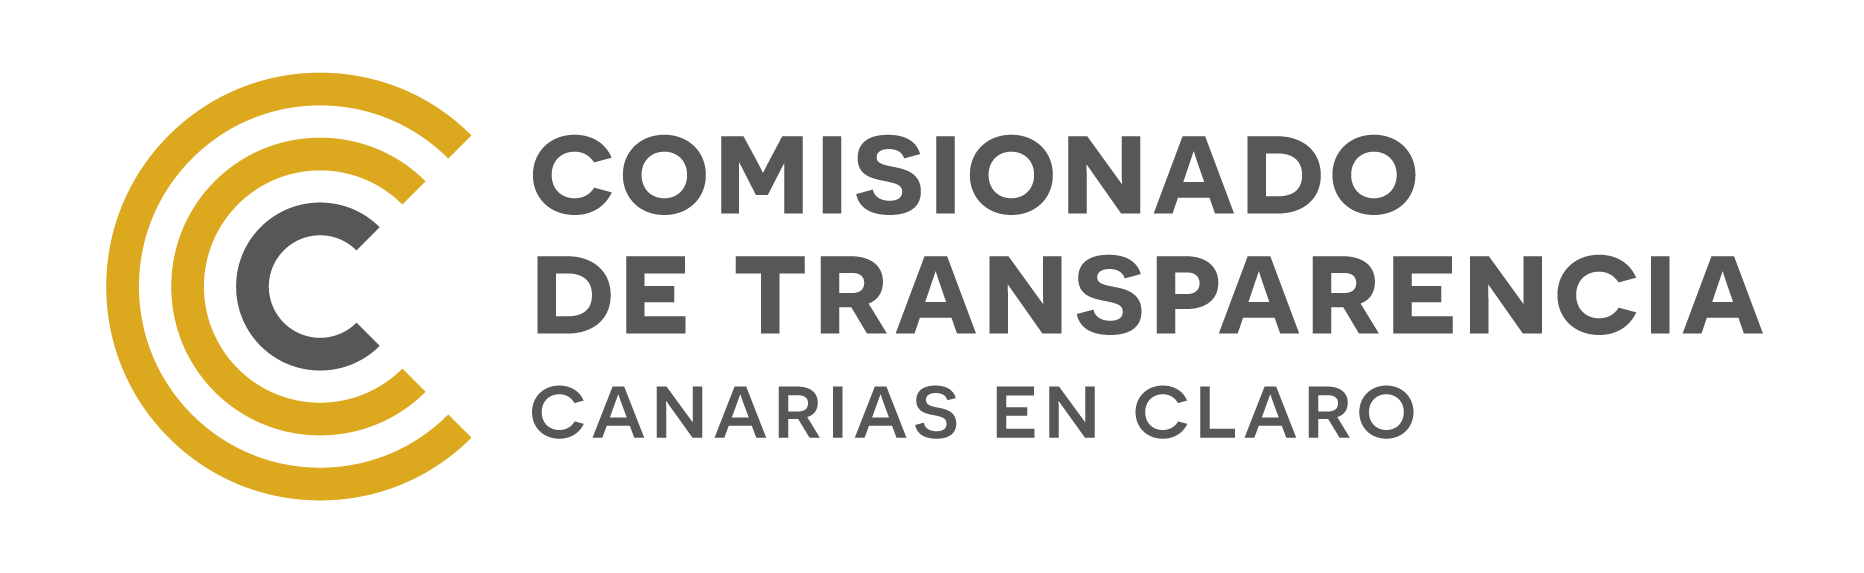 Logo Comisionado de Transparencia